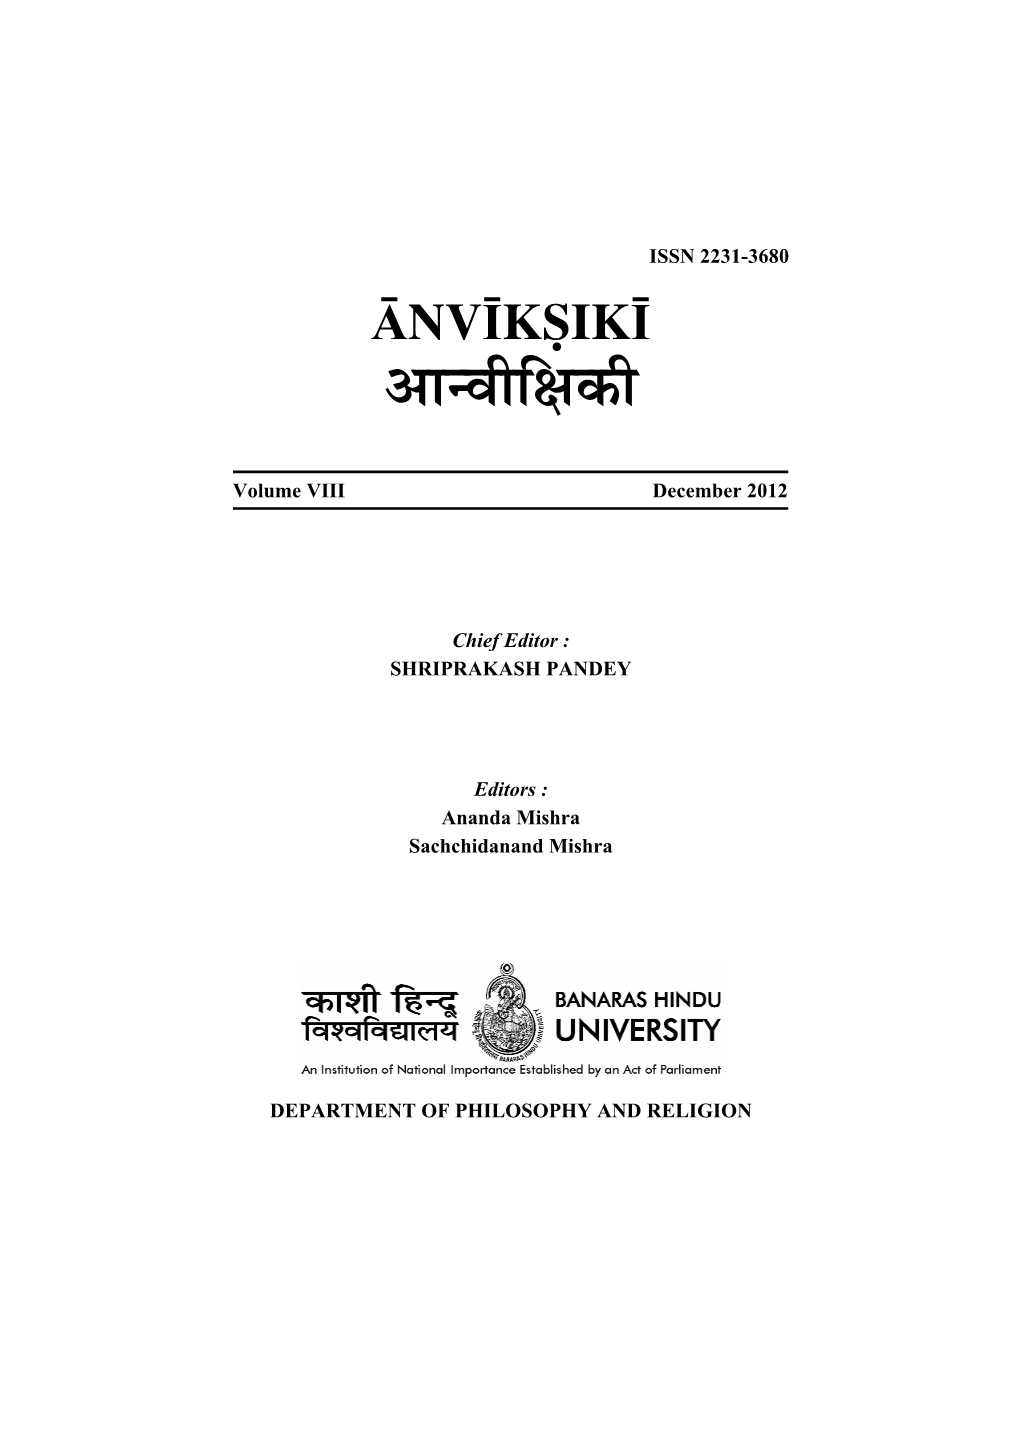 Anvikshiki Volume VIII